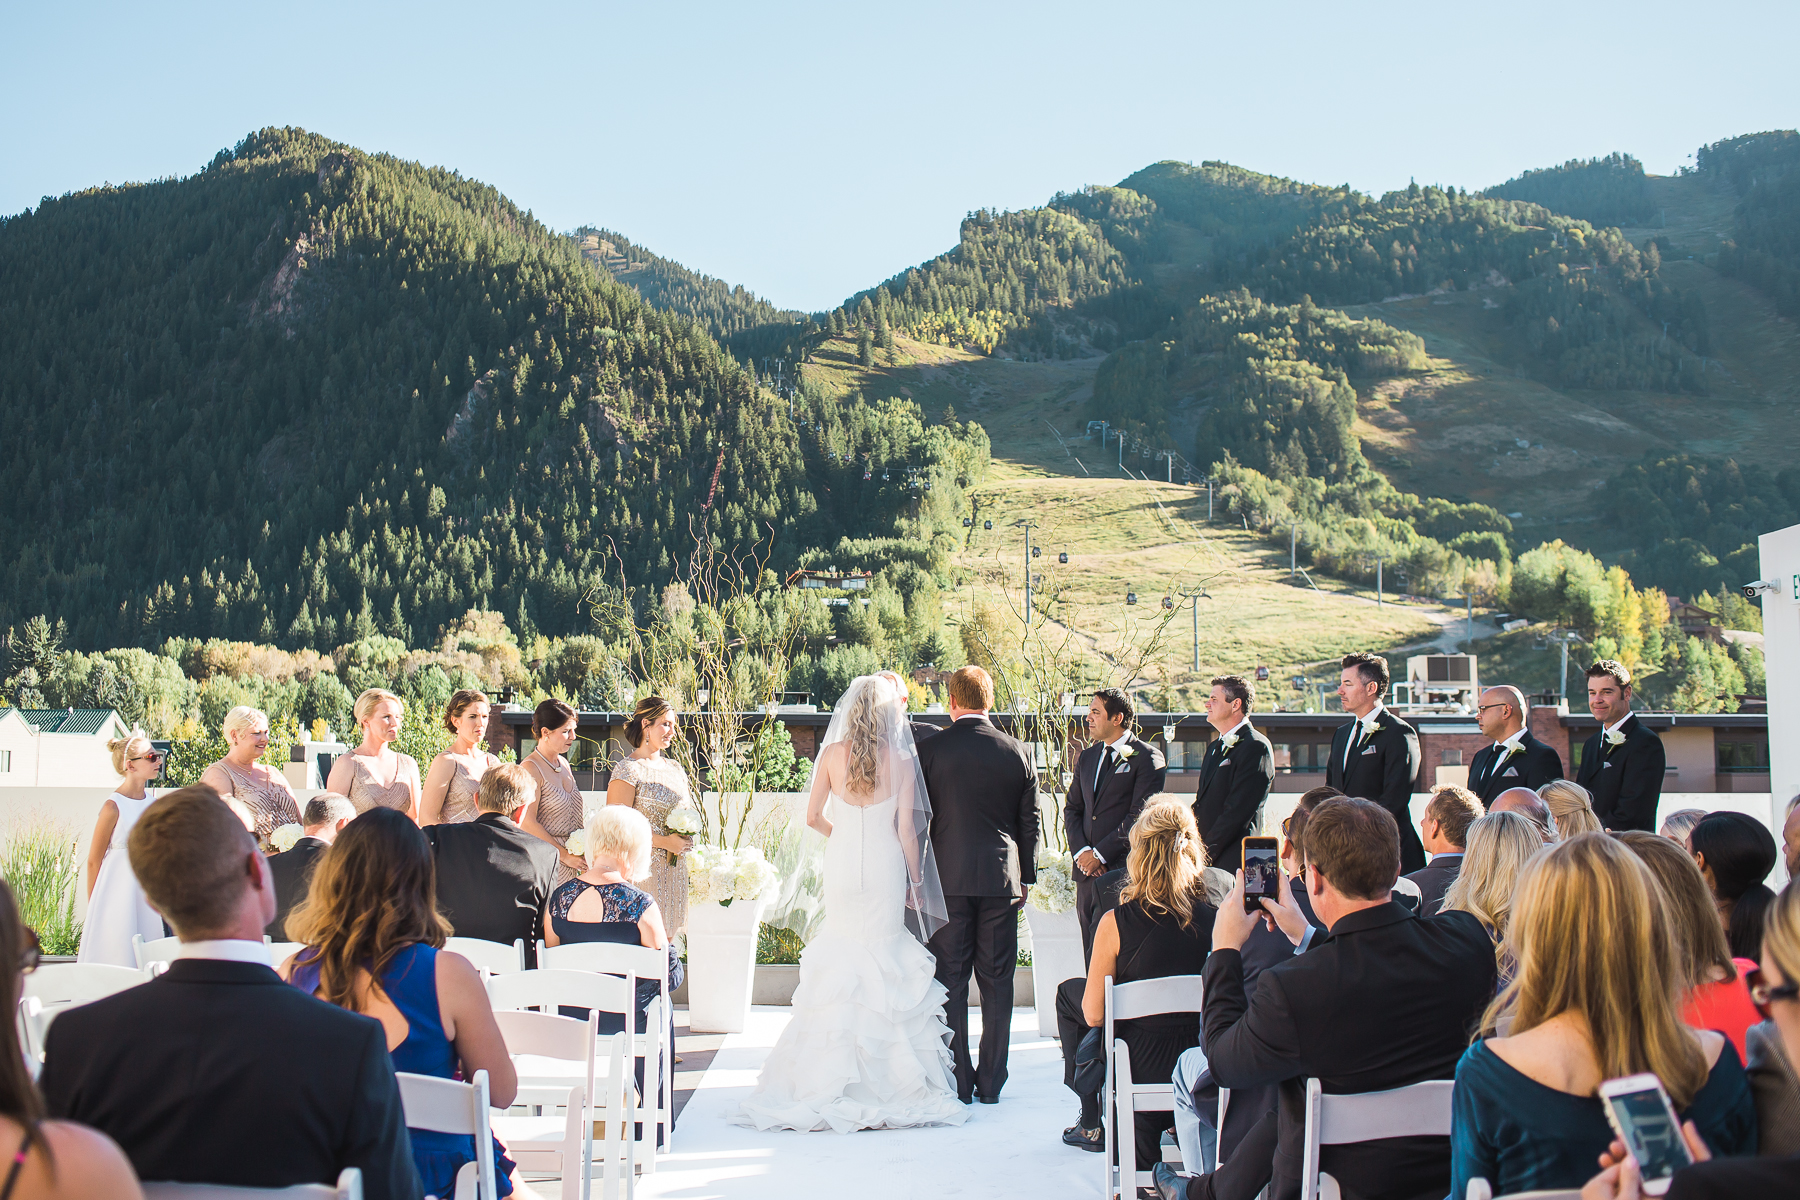  Aspen Art Museum Wedding | Wedding Dress from Little White Dress in Denver | Amy Bluestar Photography 